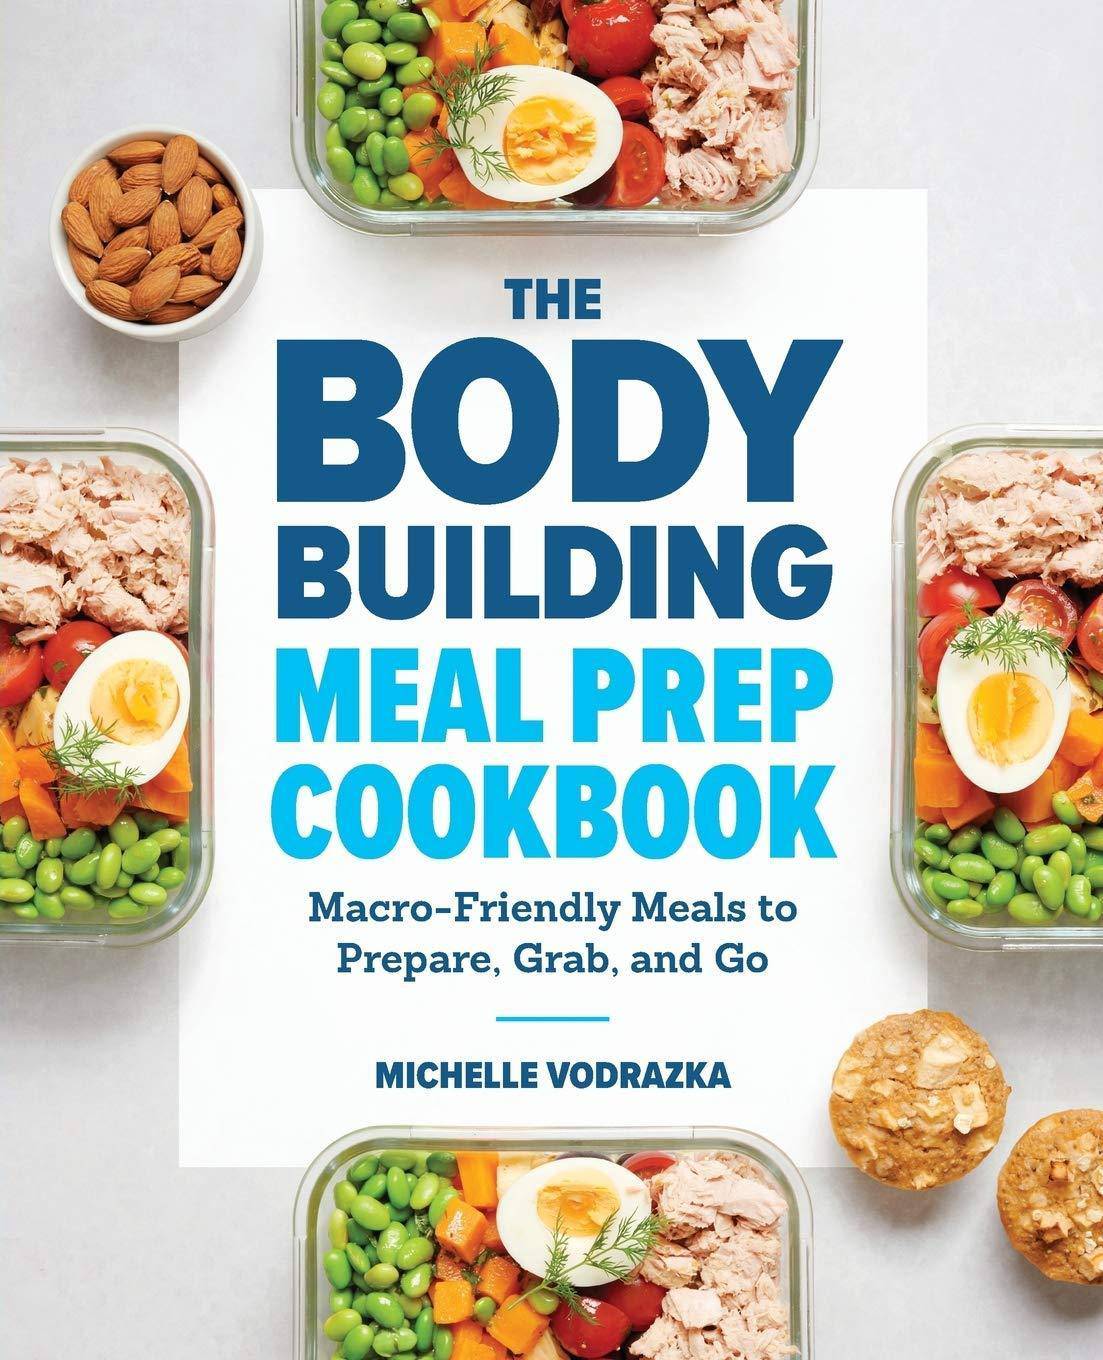 The Bodybuilding Meal Prep Cookbook - SureShot Books Publishing LLC